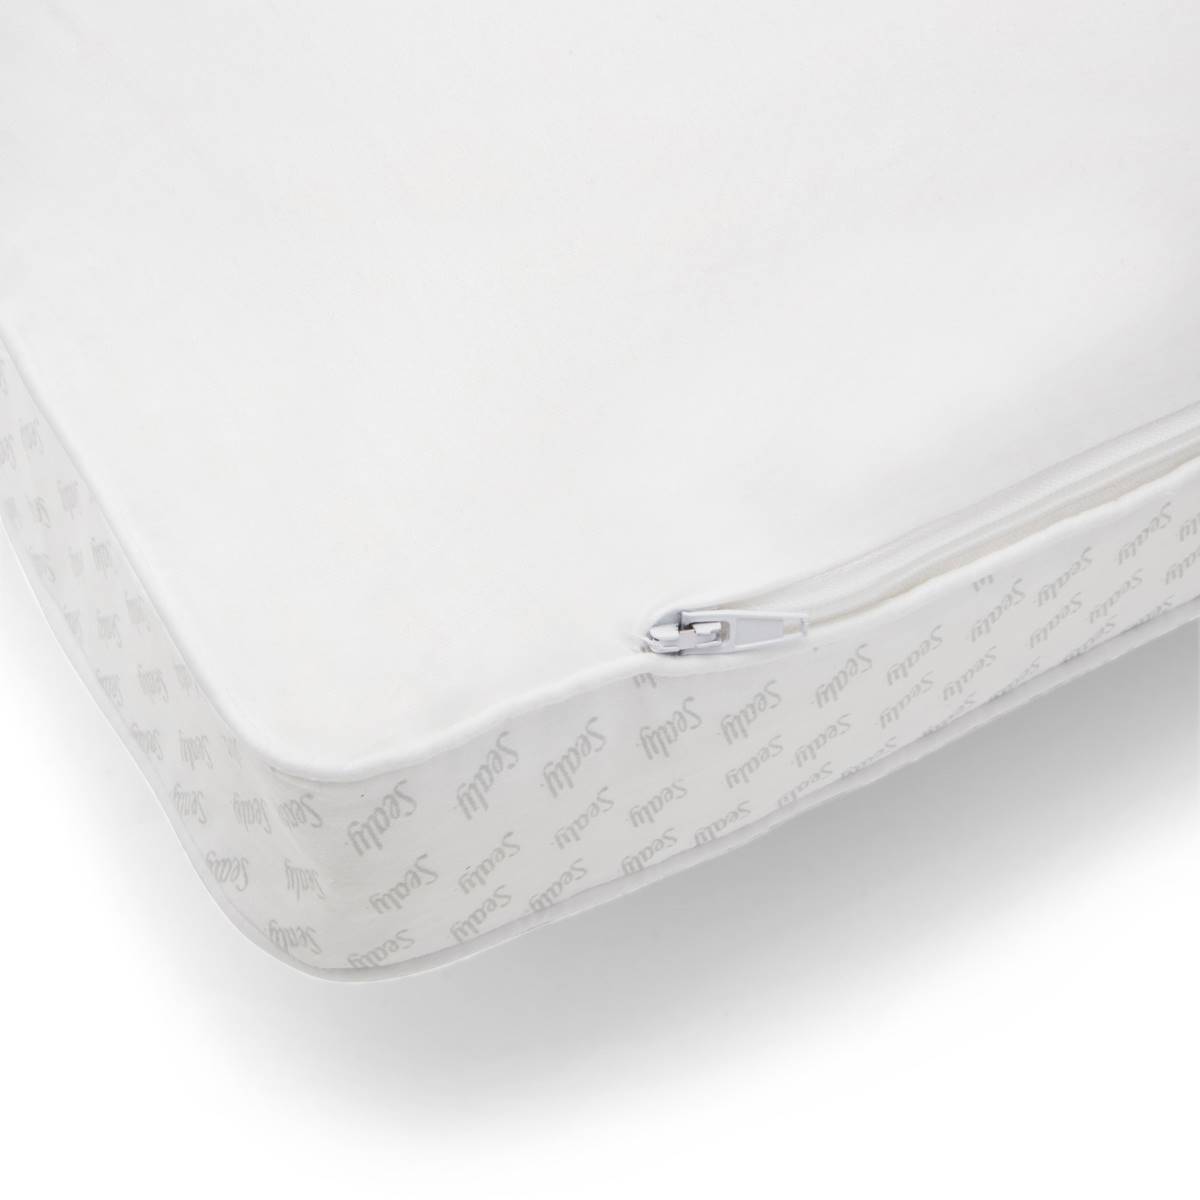 Sealy(R) Down Alternative & Memory Foam Pillow